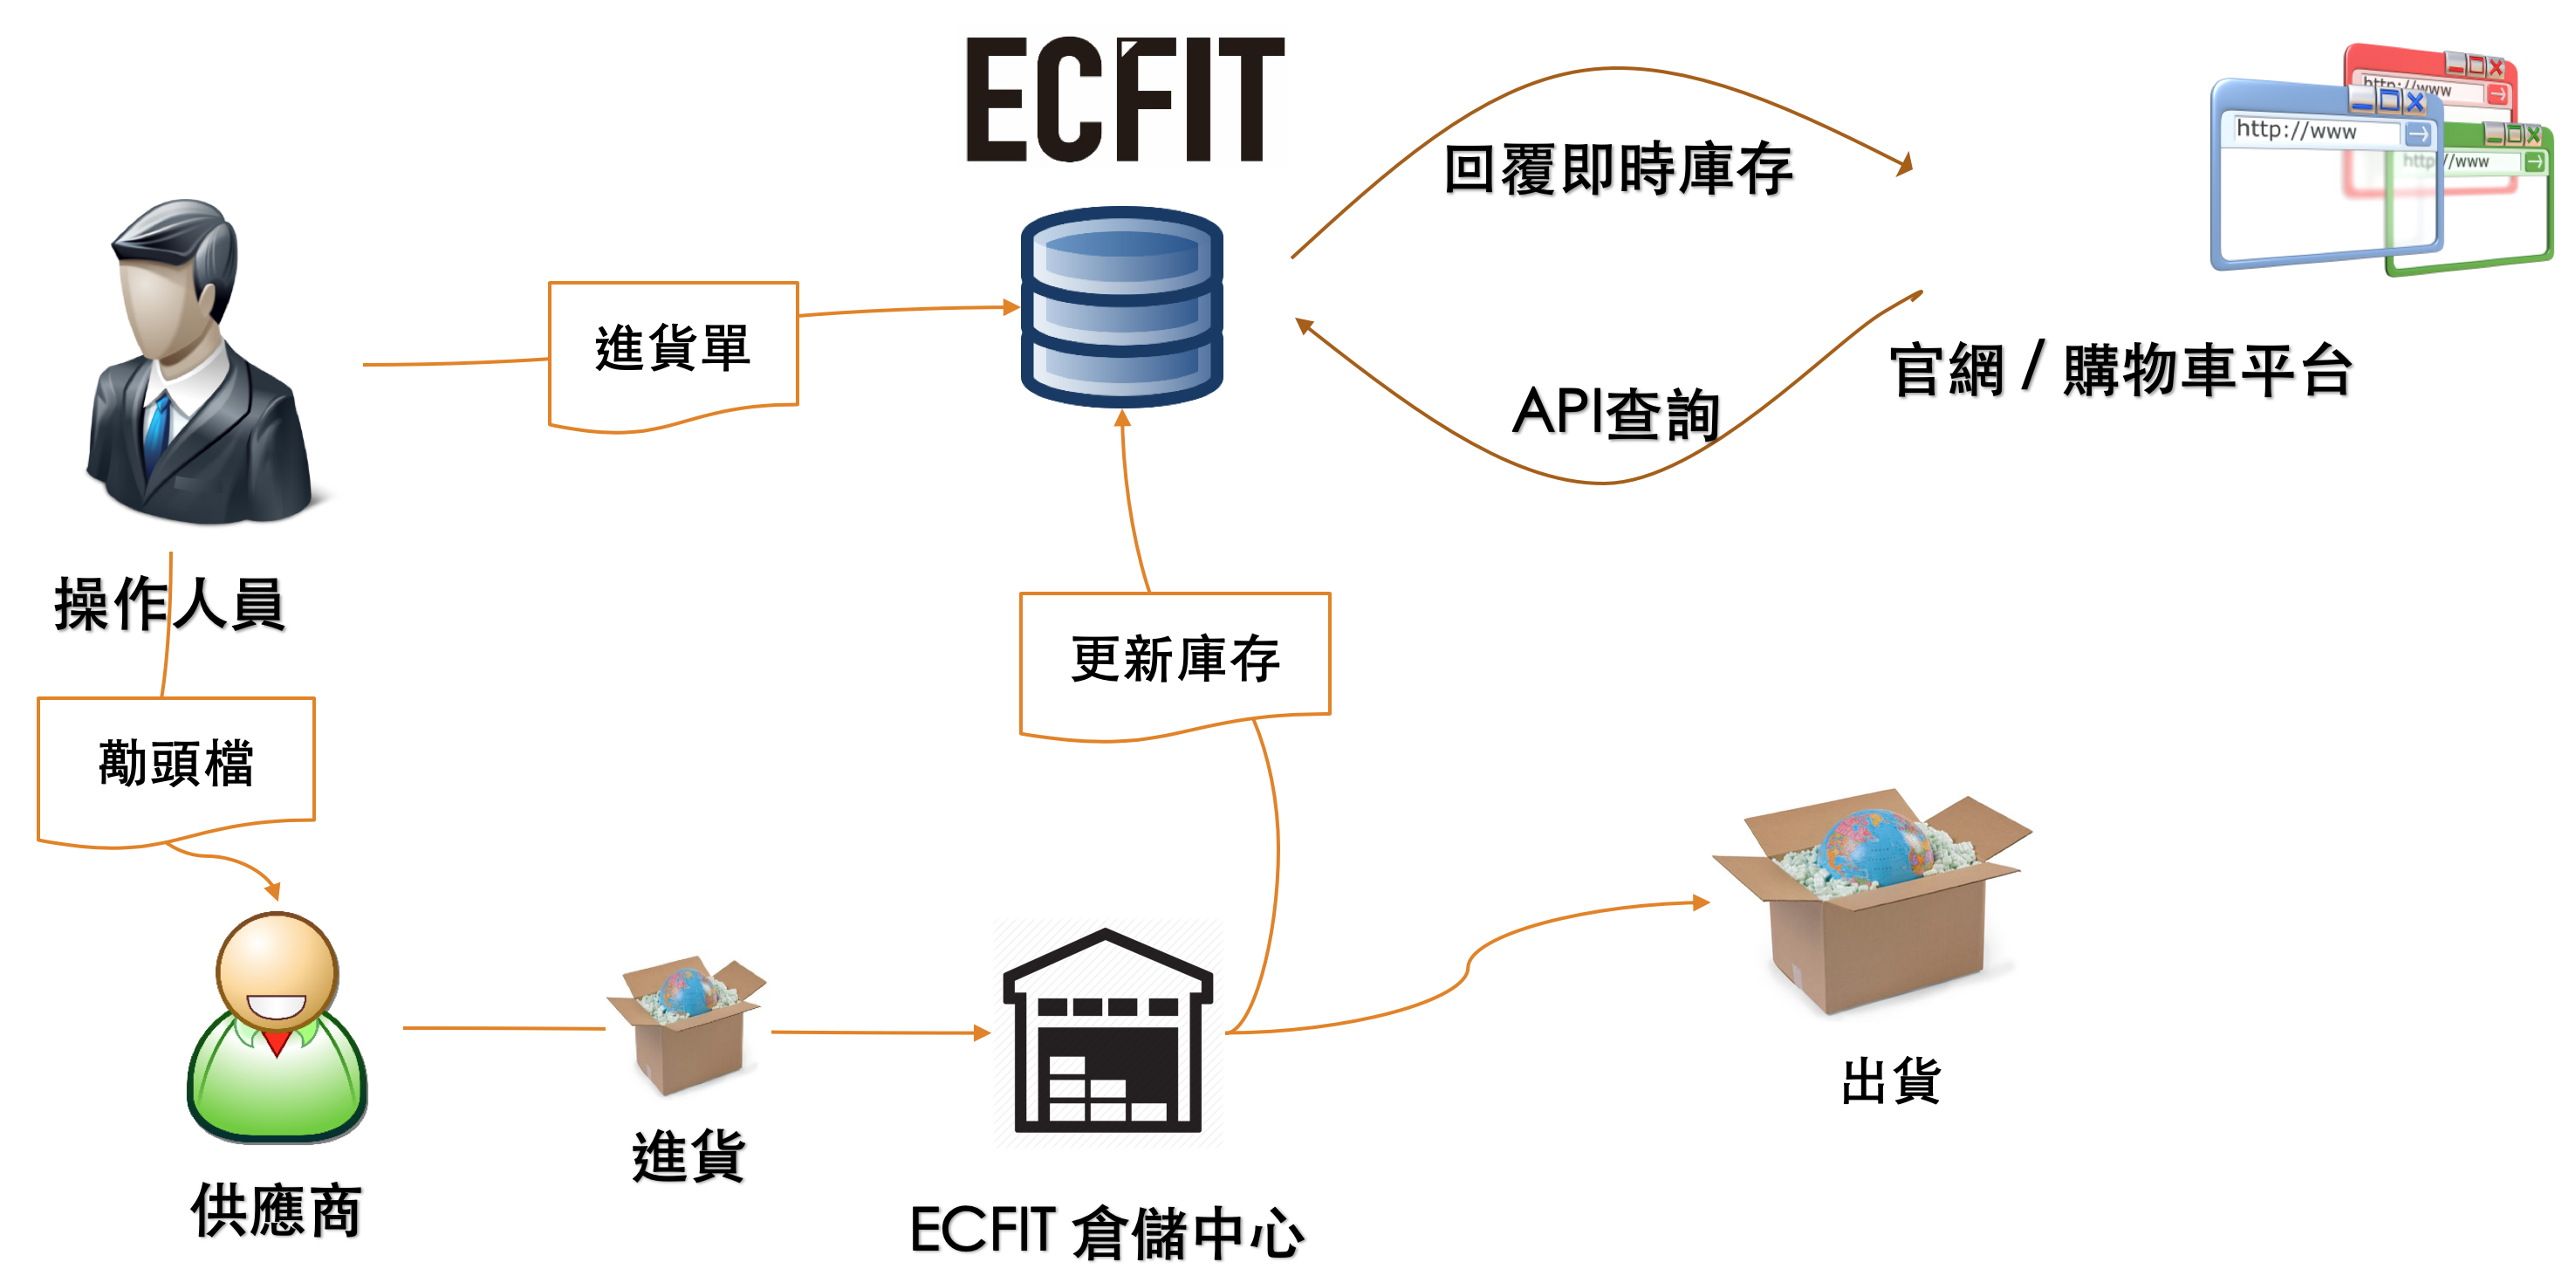 ECFIT 線上庫存管理